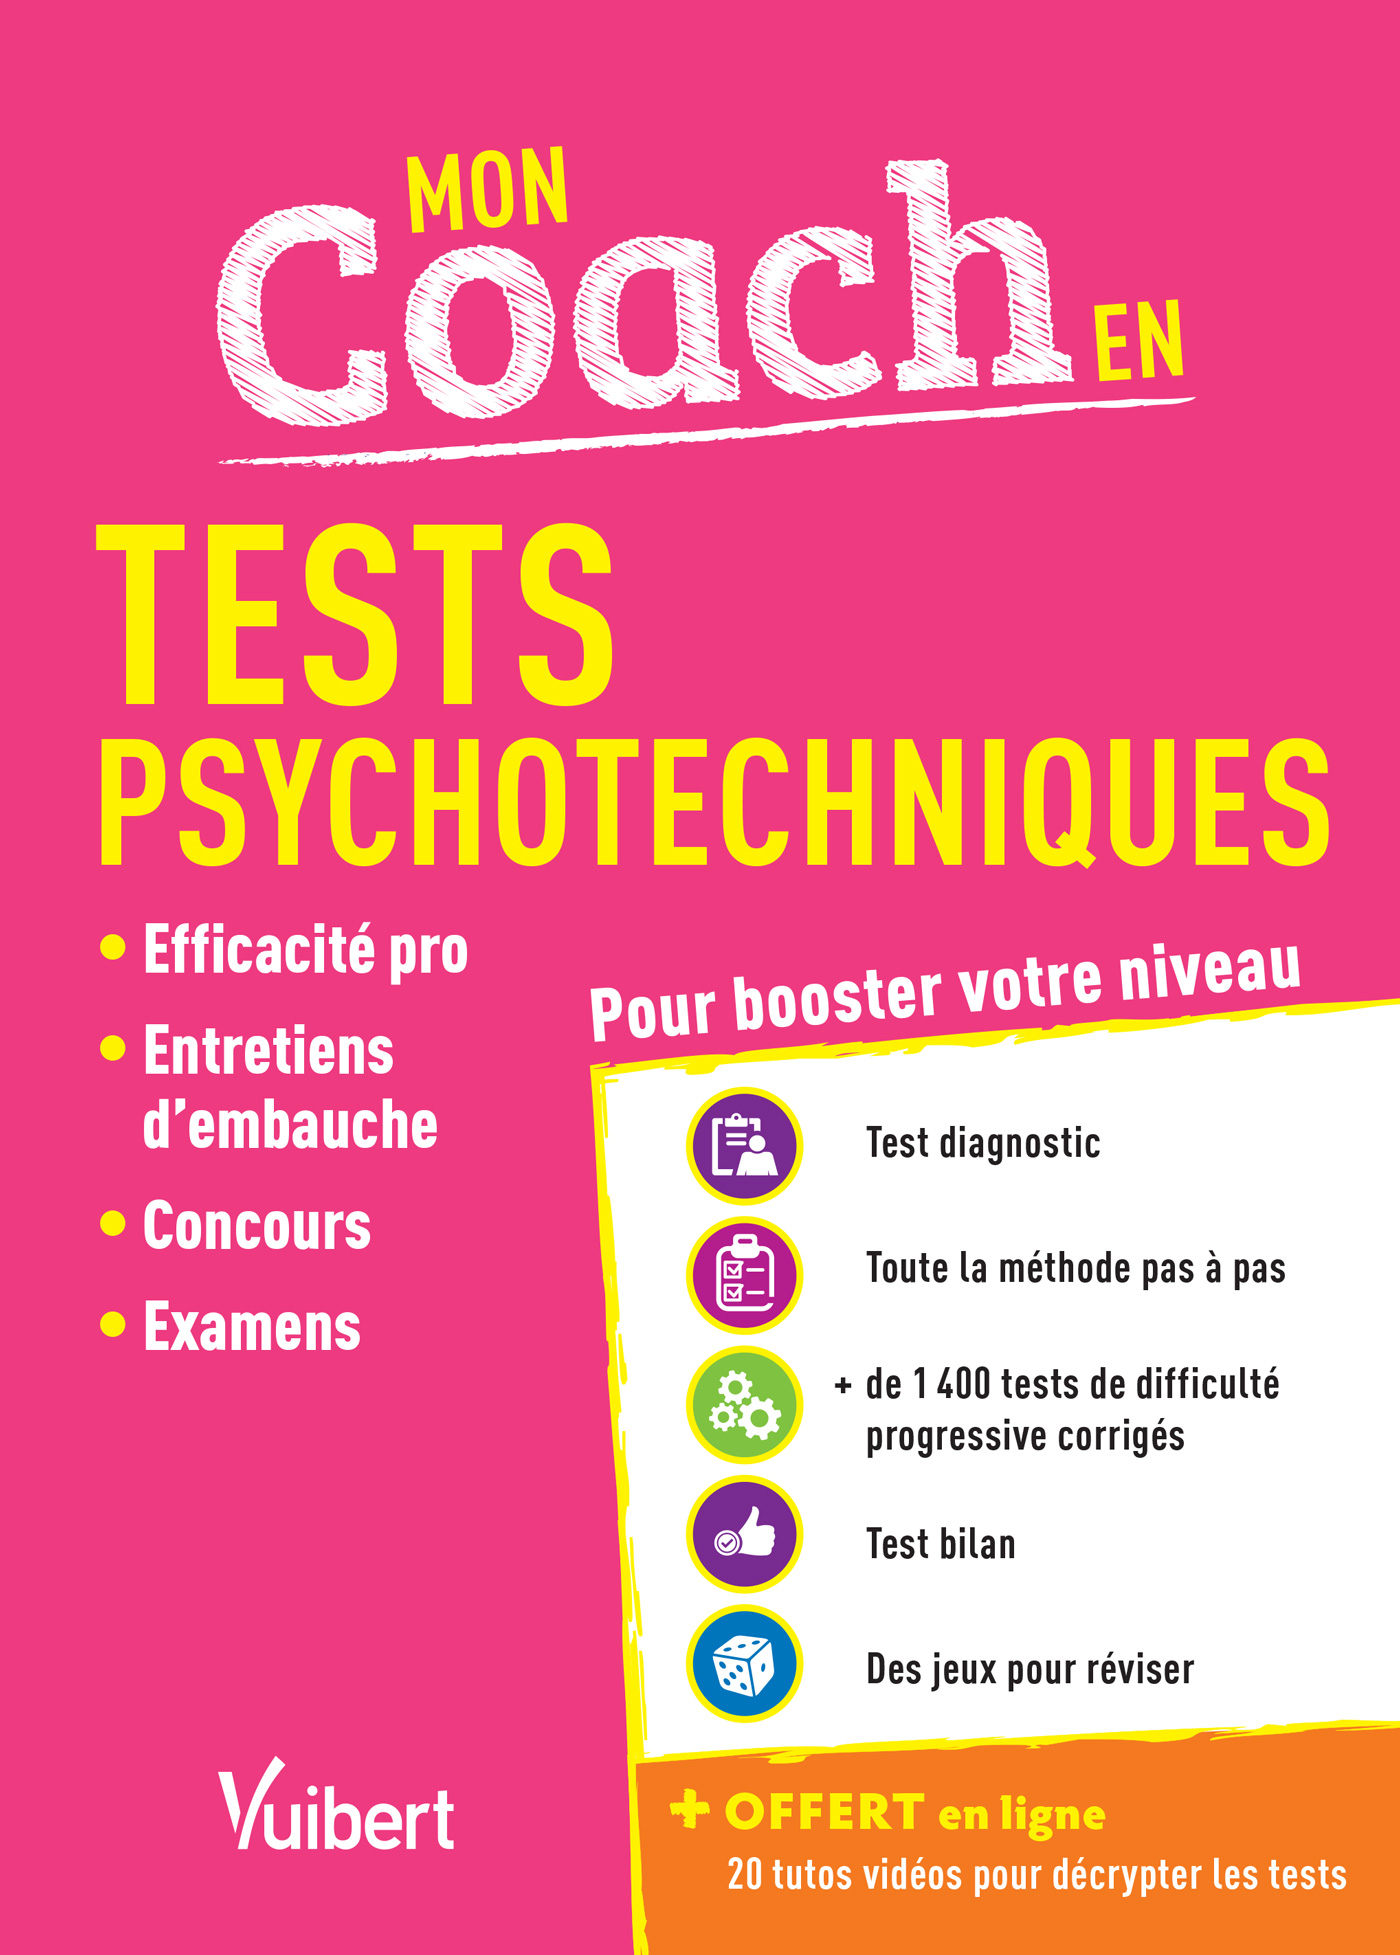 Mon coach en Tests psychotechniques - Avec 20 tutos offerts | Vuibert